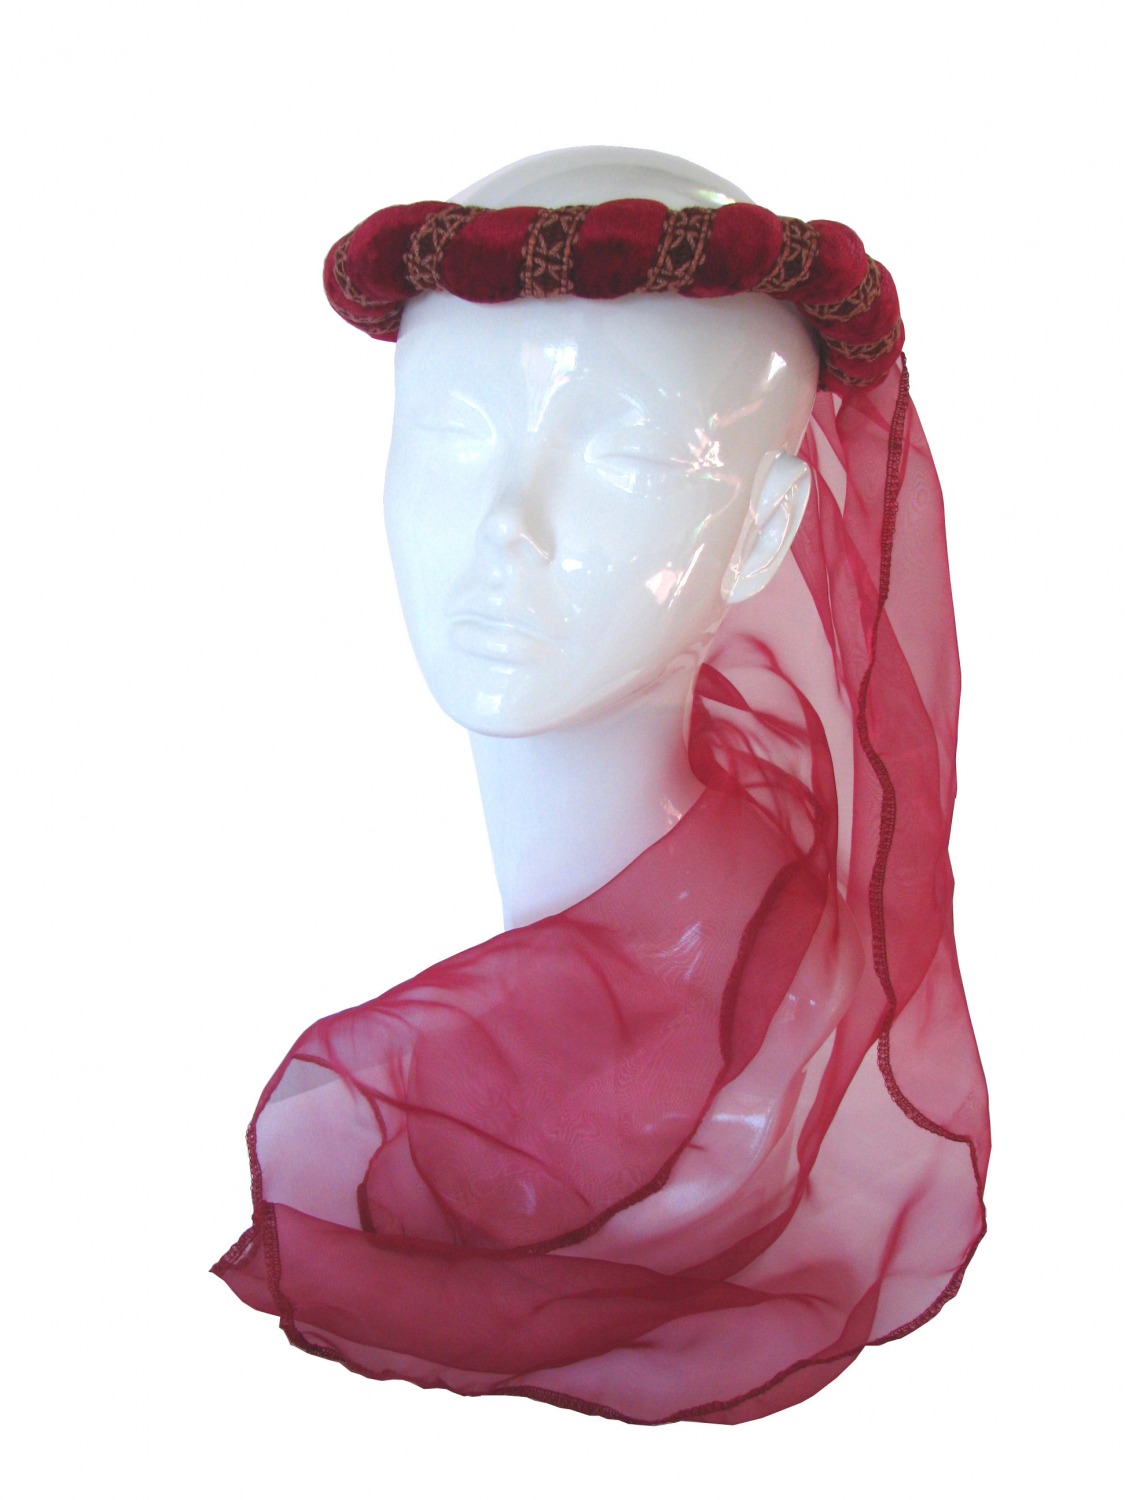 Ladies Petite Medieval Renaissance Costume And Headdress Size 10 - 12 Image